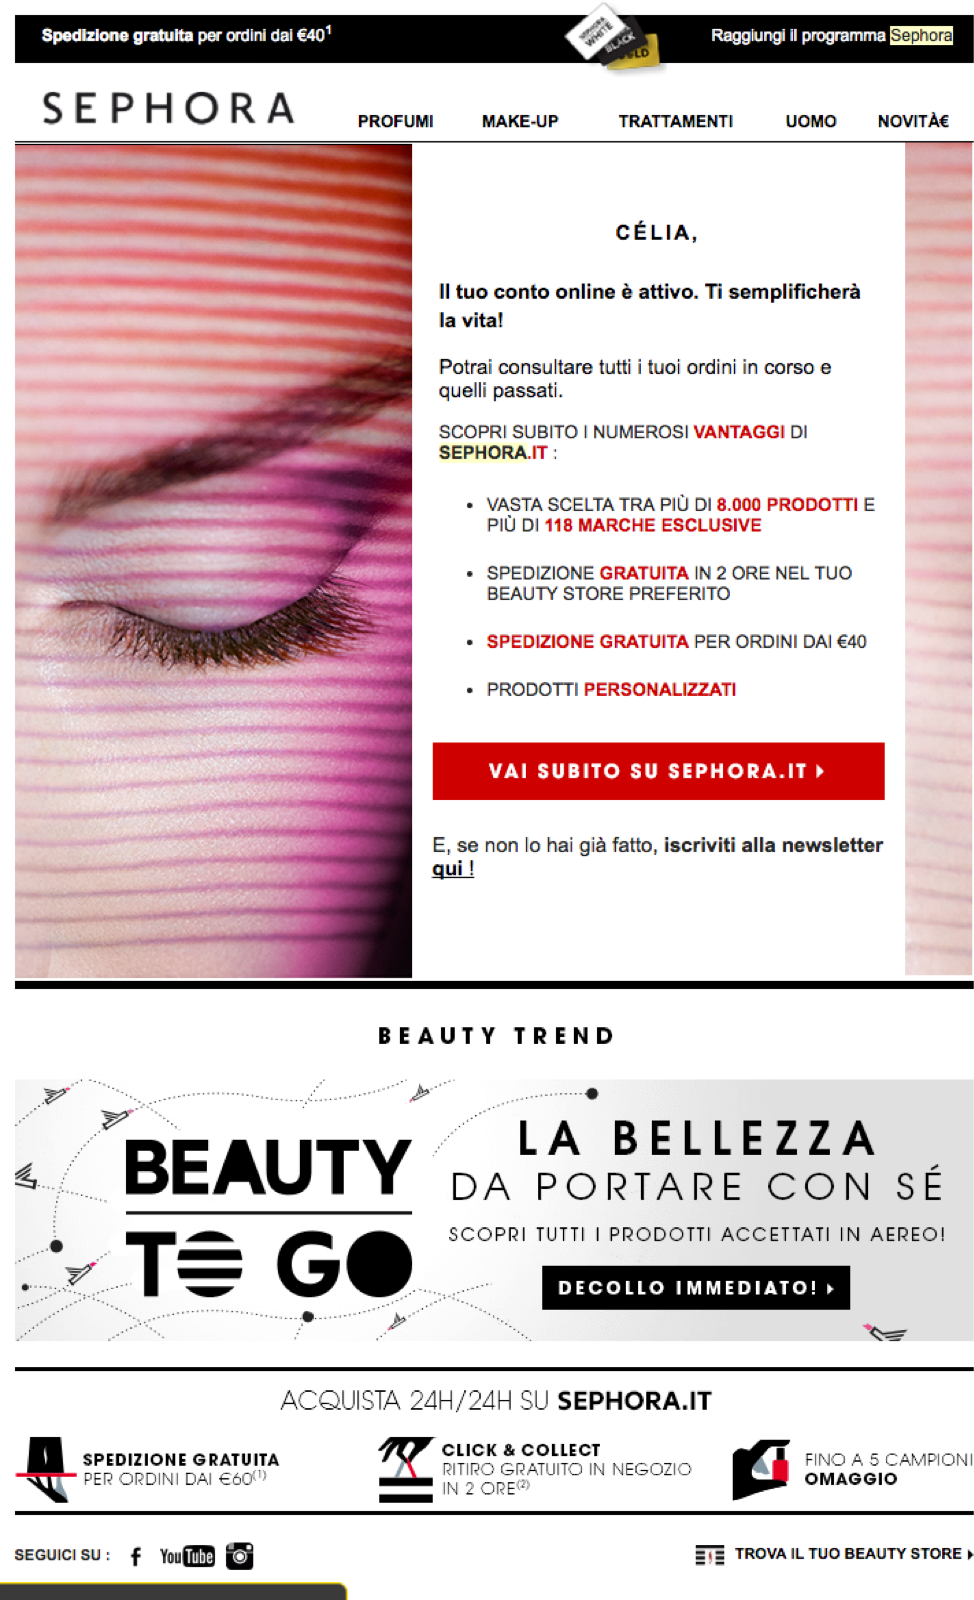 Sephora Italian welcome email